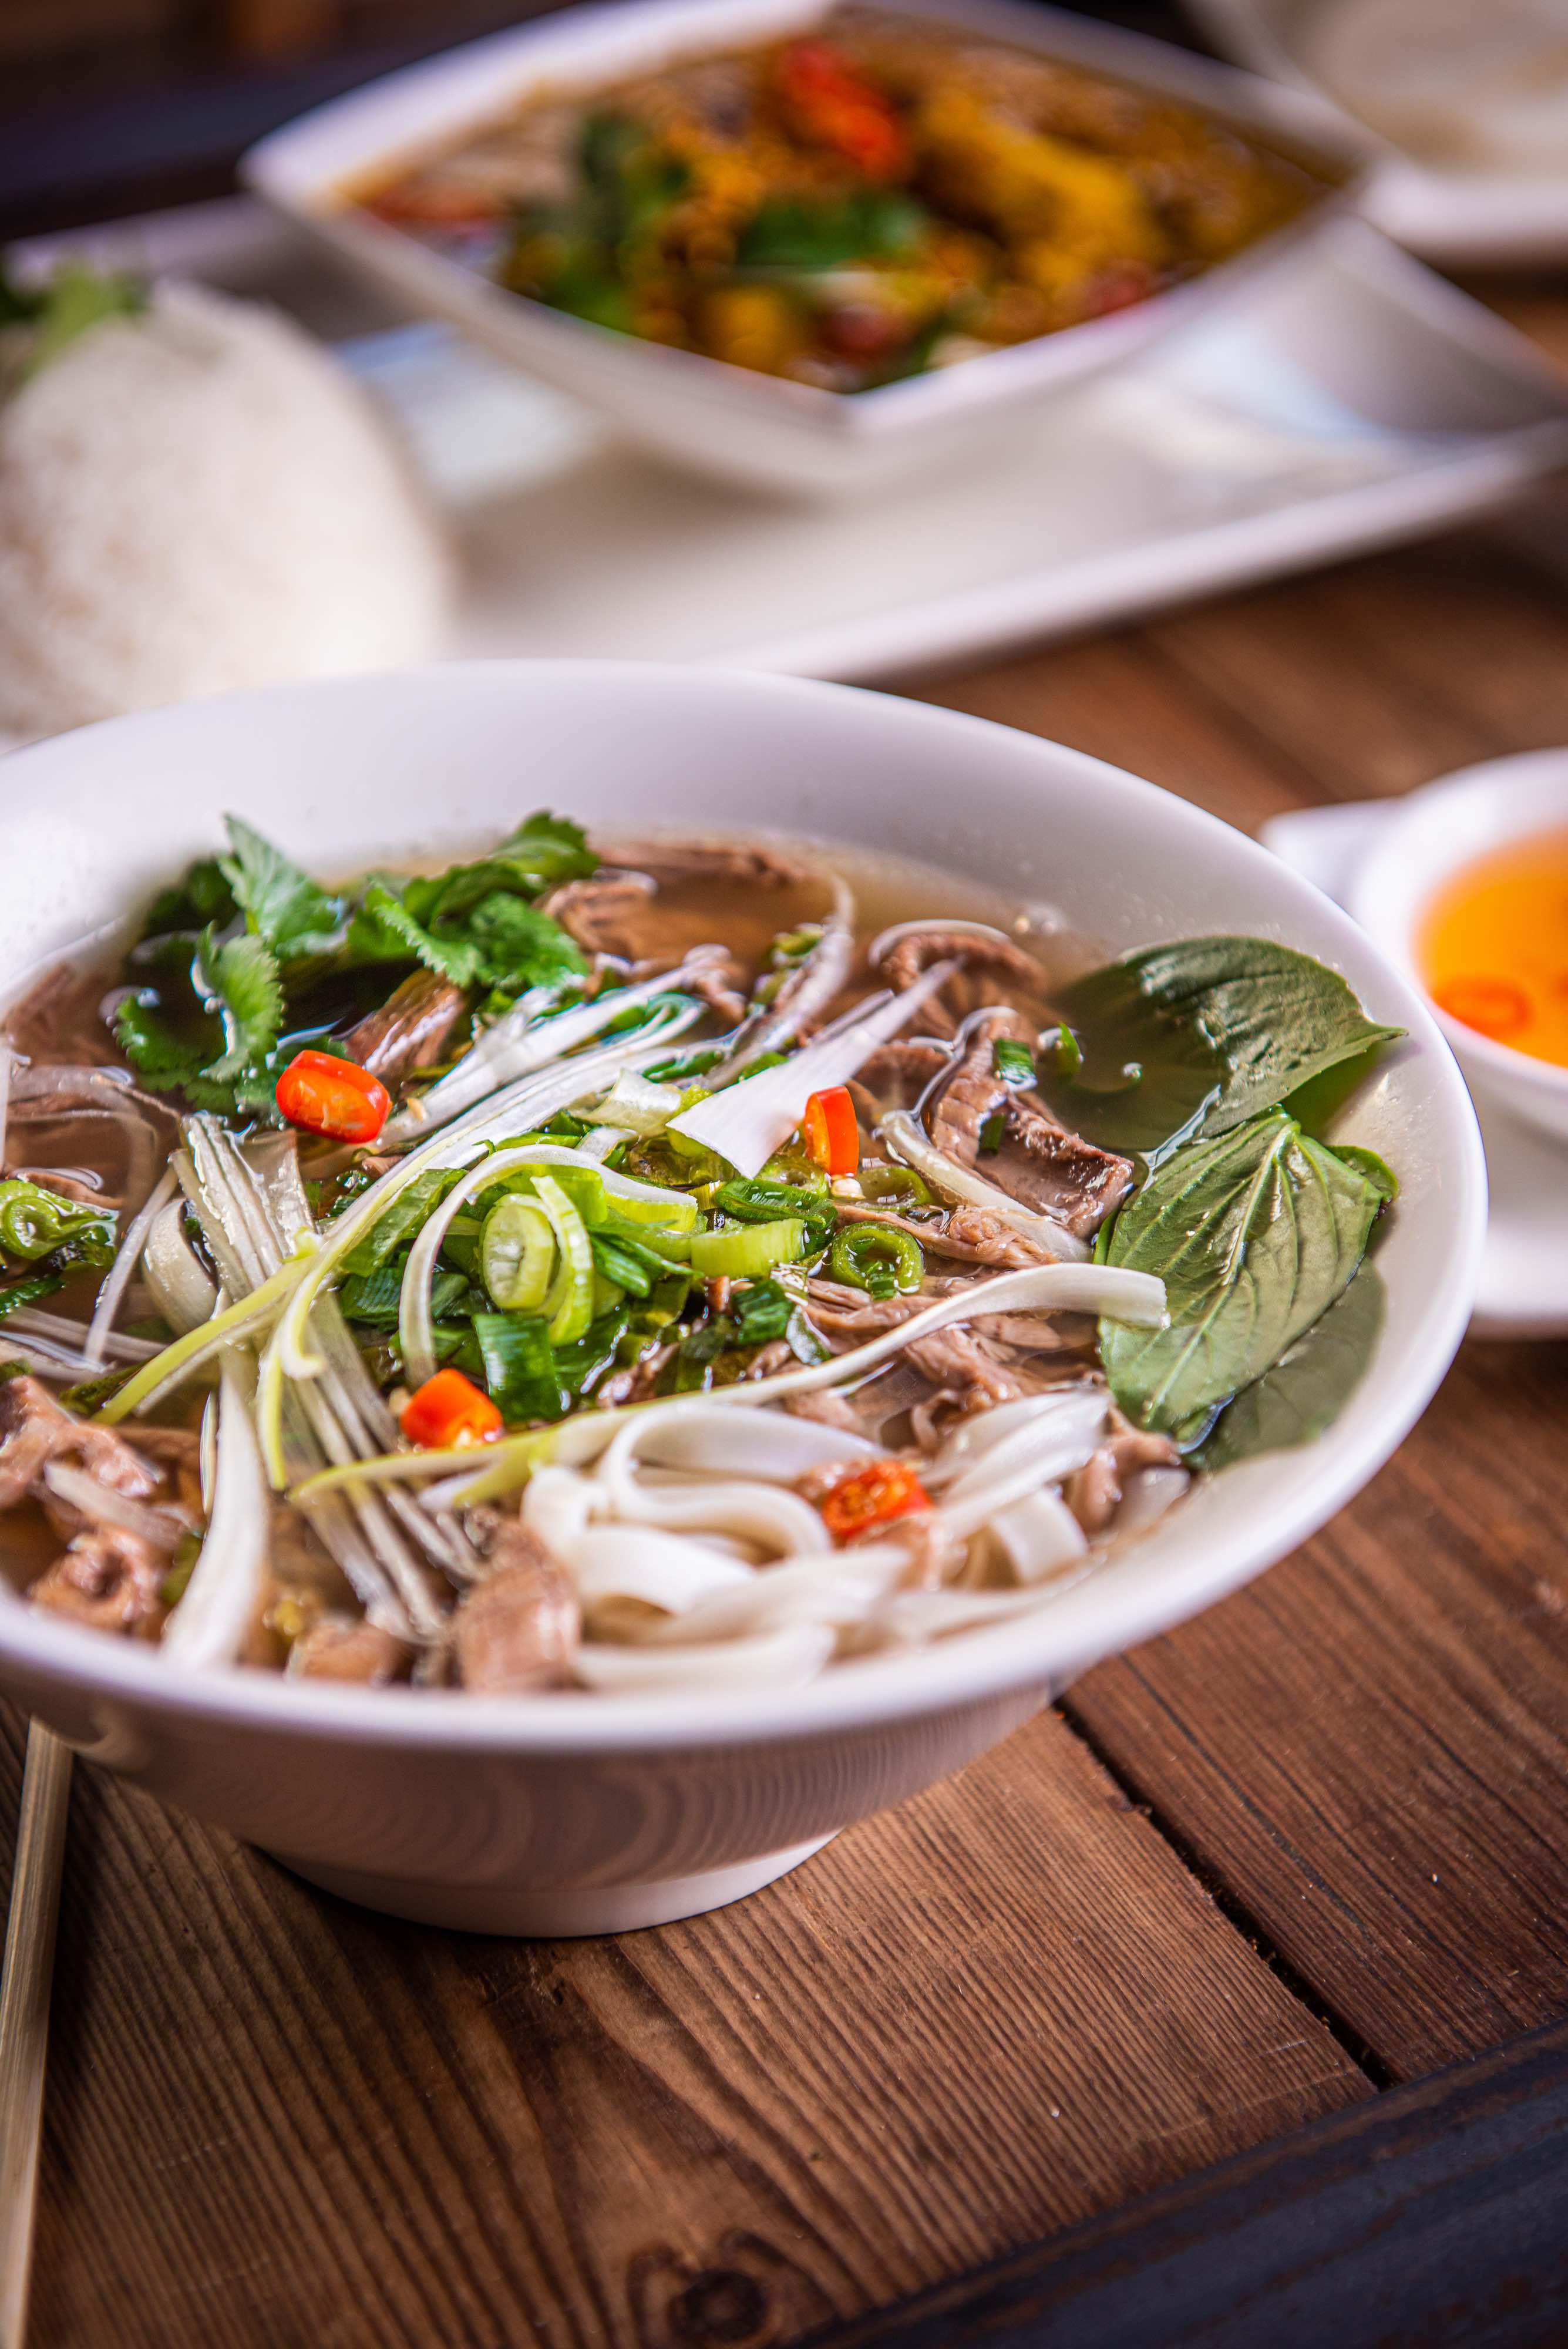 Fresh, Gluten-free, healthy Vietnamese Pho noodle soup Pho Milton Keynes 01908 880251